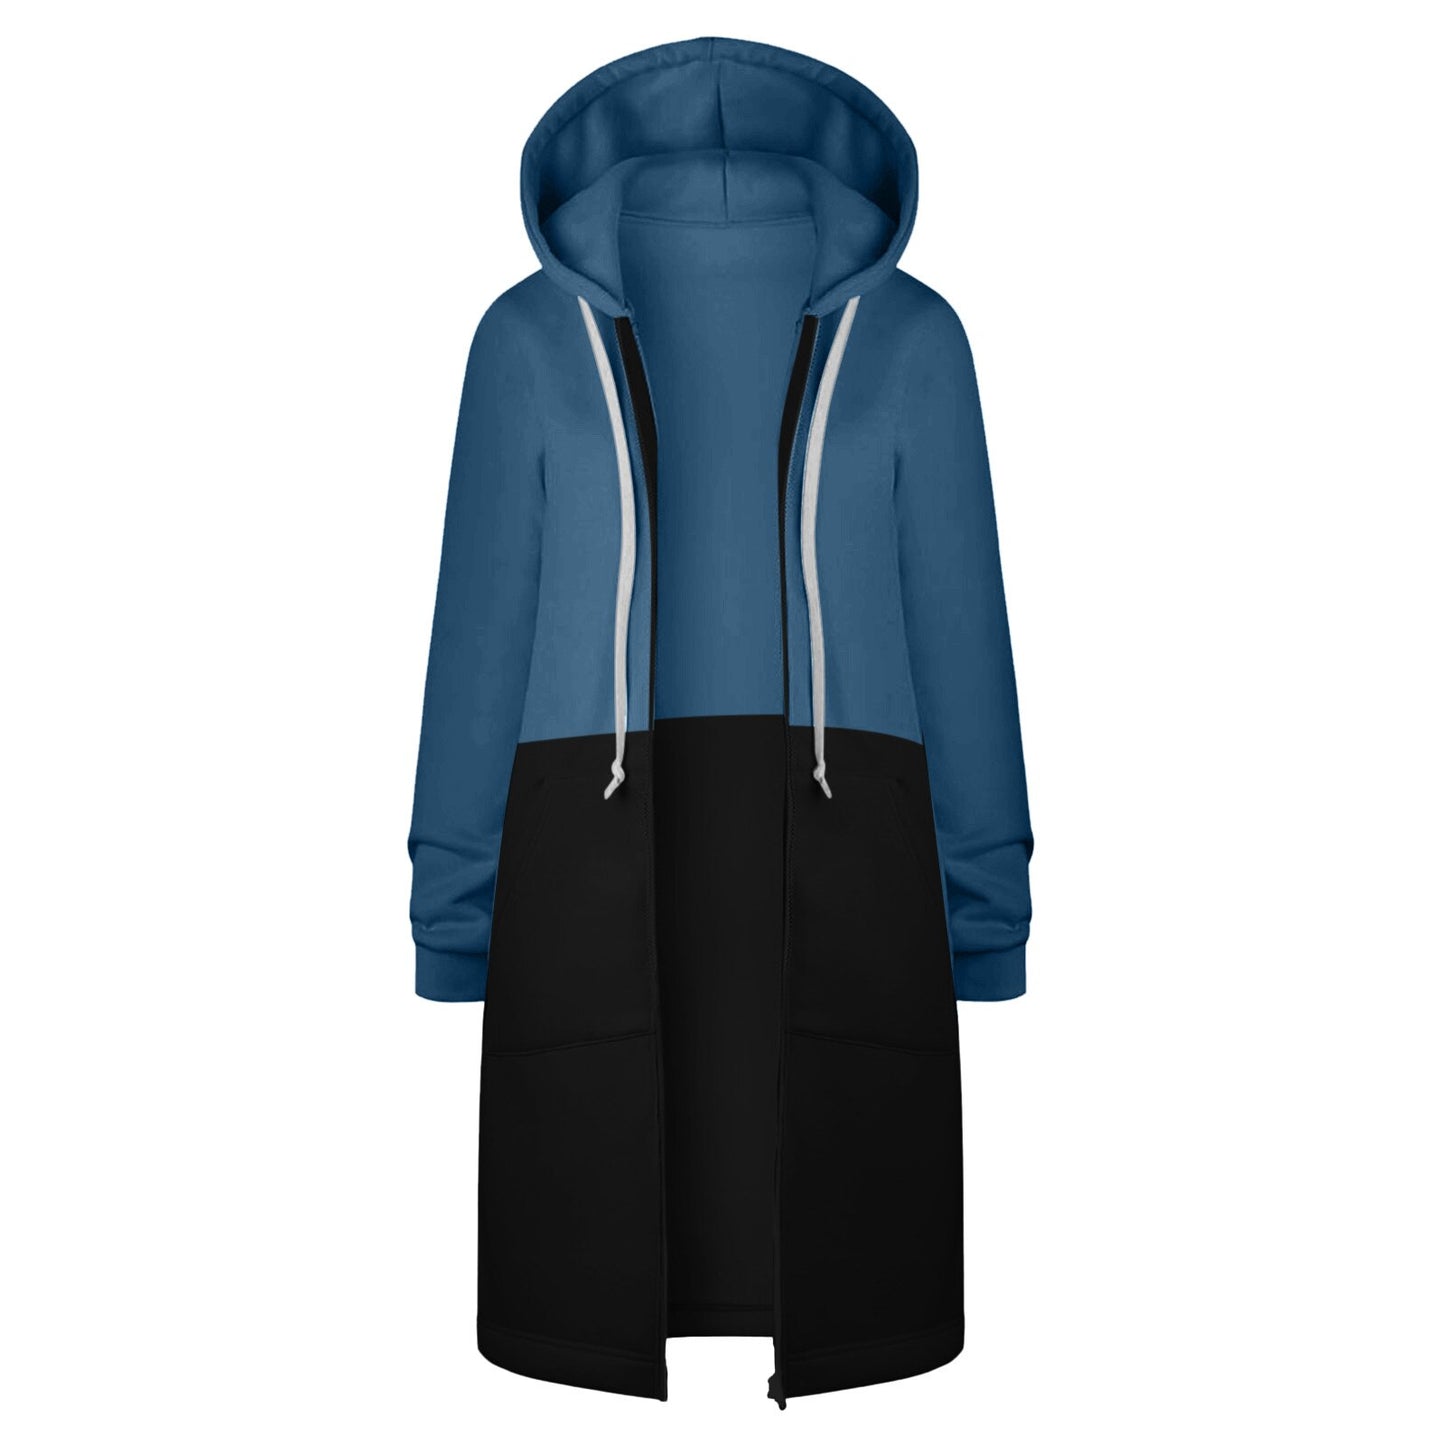 2023 Autumn Casual Women Long Hoodies Sweatshirt Coat Zip Up Hooded Jacket Winter Pockets Outerwear Plus Size Outwear Top куртка